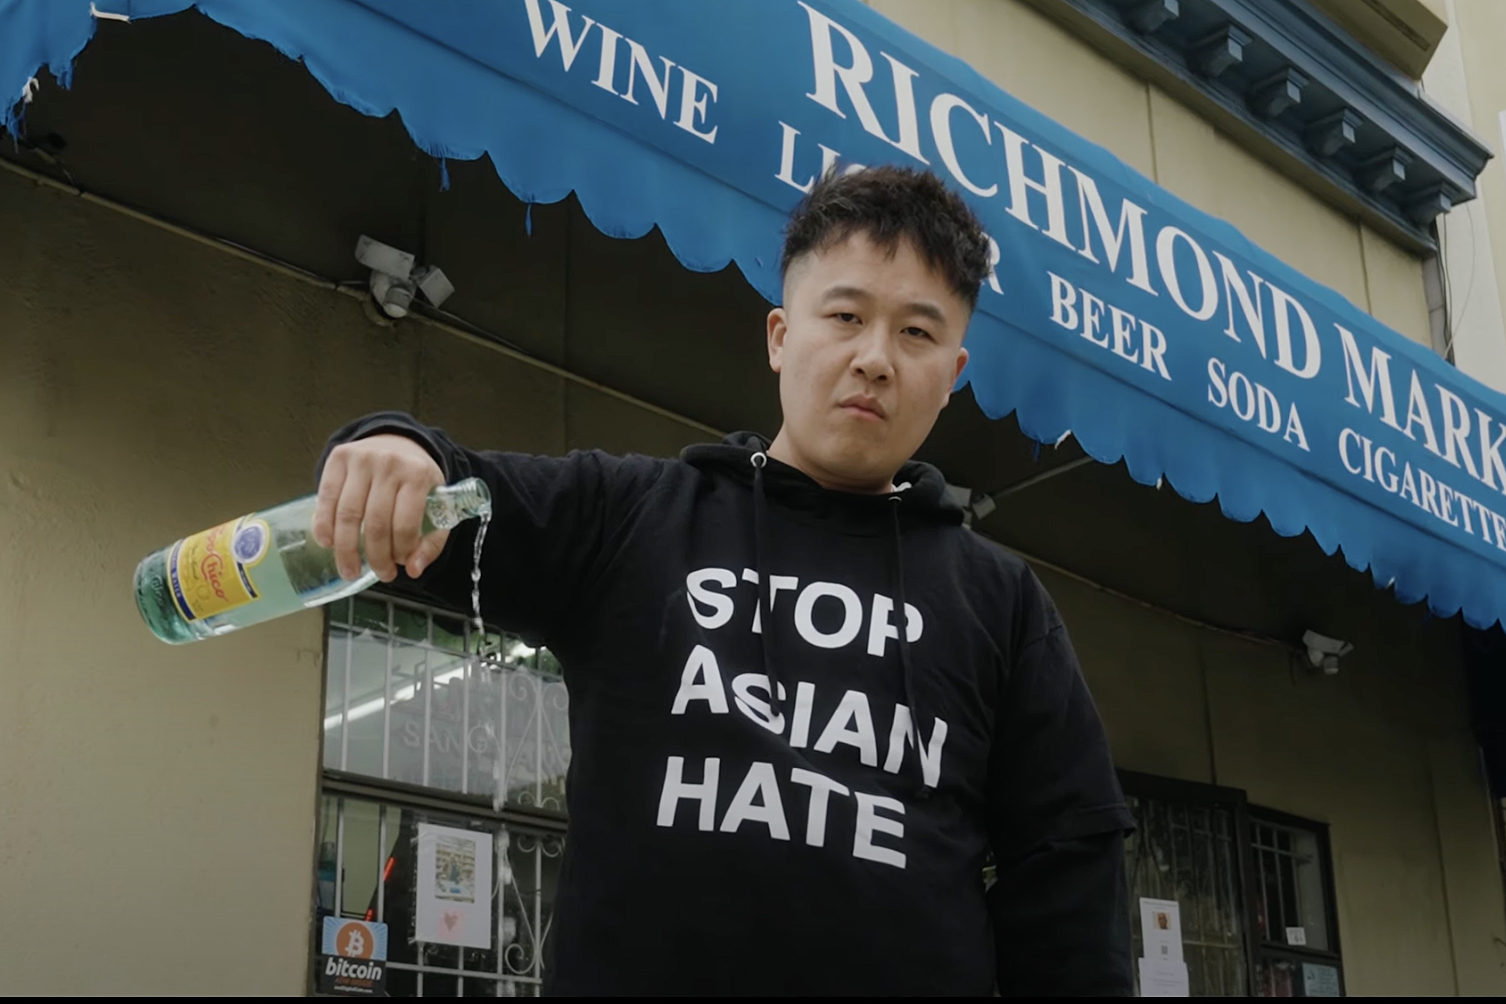 A man pours out liquor in front of Richmond Market.